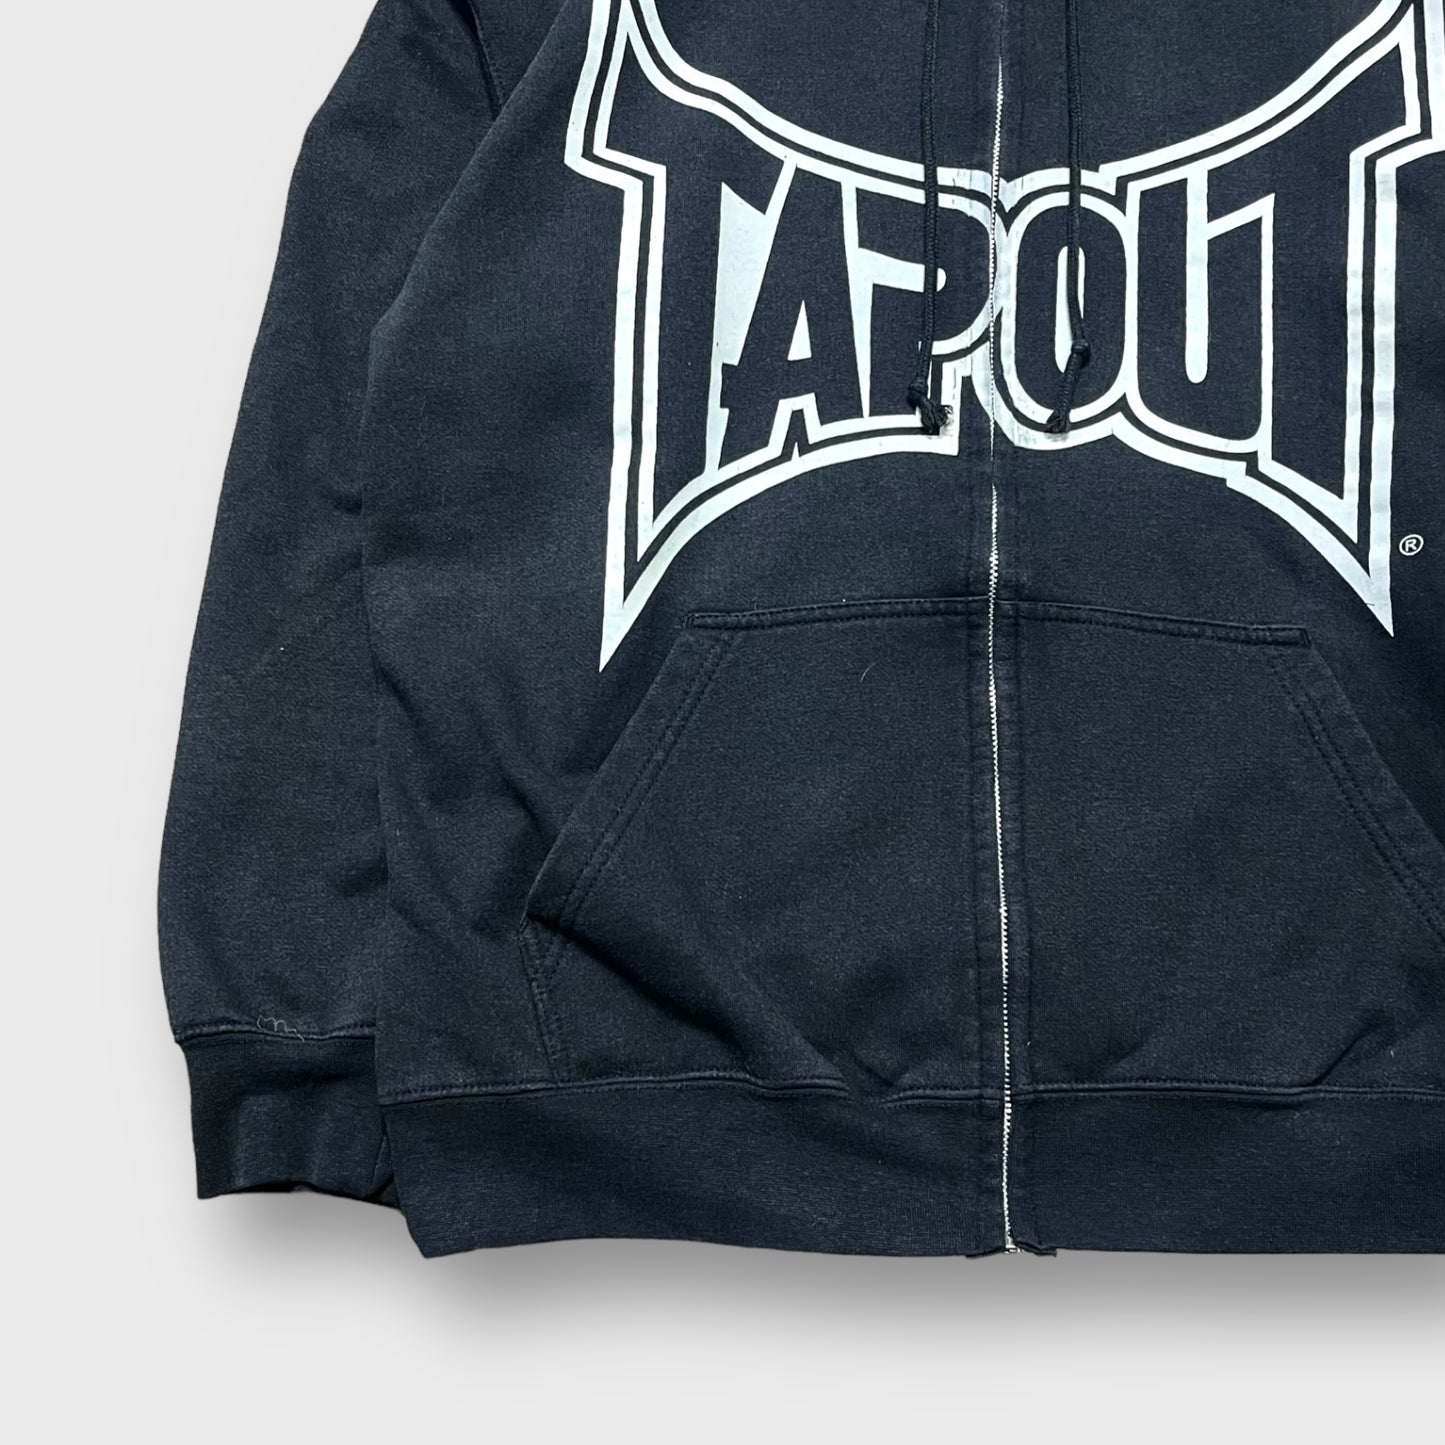 "TAPOUT" Logo design hoodie